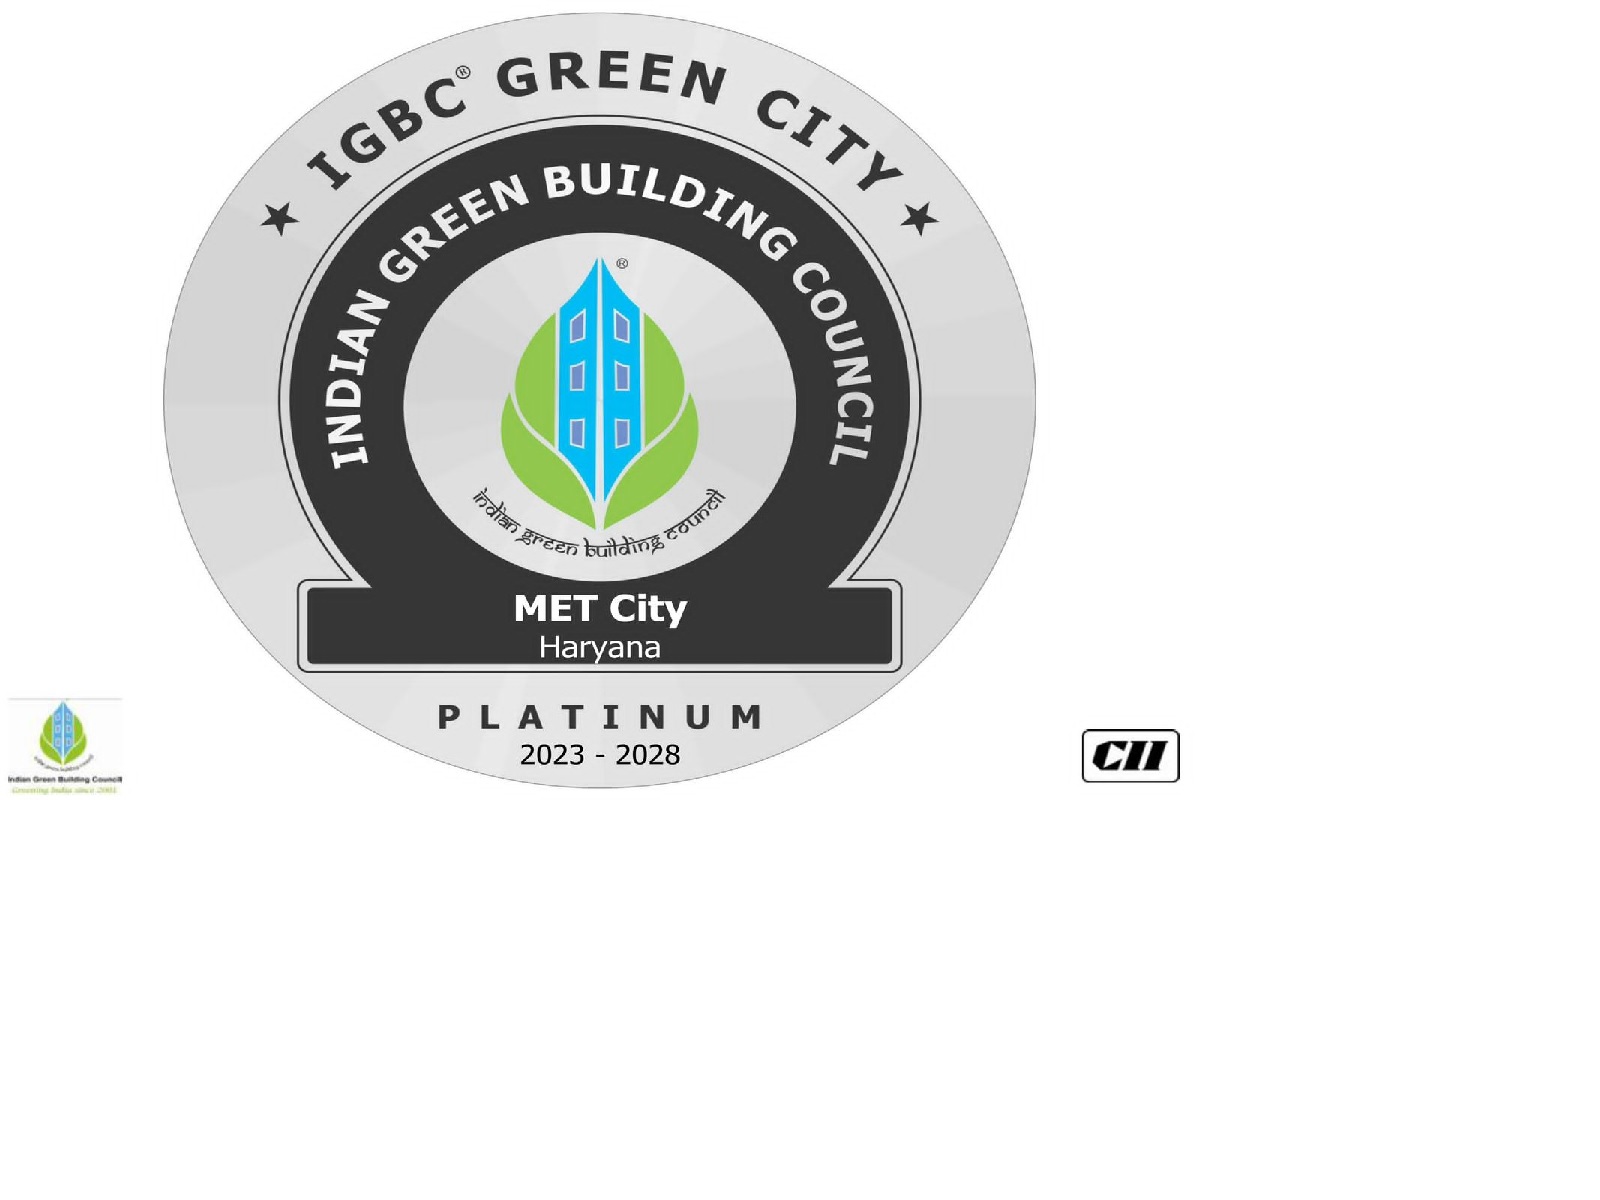 MET City becomes One of India’s largest IGBC PLATINUM RATED Greenfield Smart City: میٹ سٹی ہندوستان کے سب سے بڑے آئی جی بی سی پلاٹینم ریٹیڈ گرین فیلڈ اسمارٹ میں سے ایک